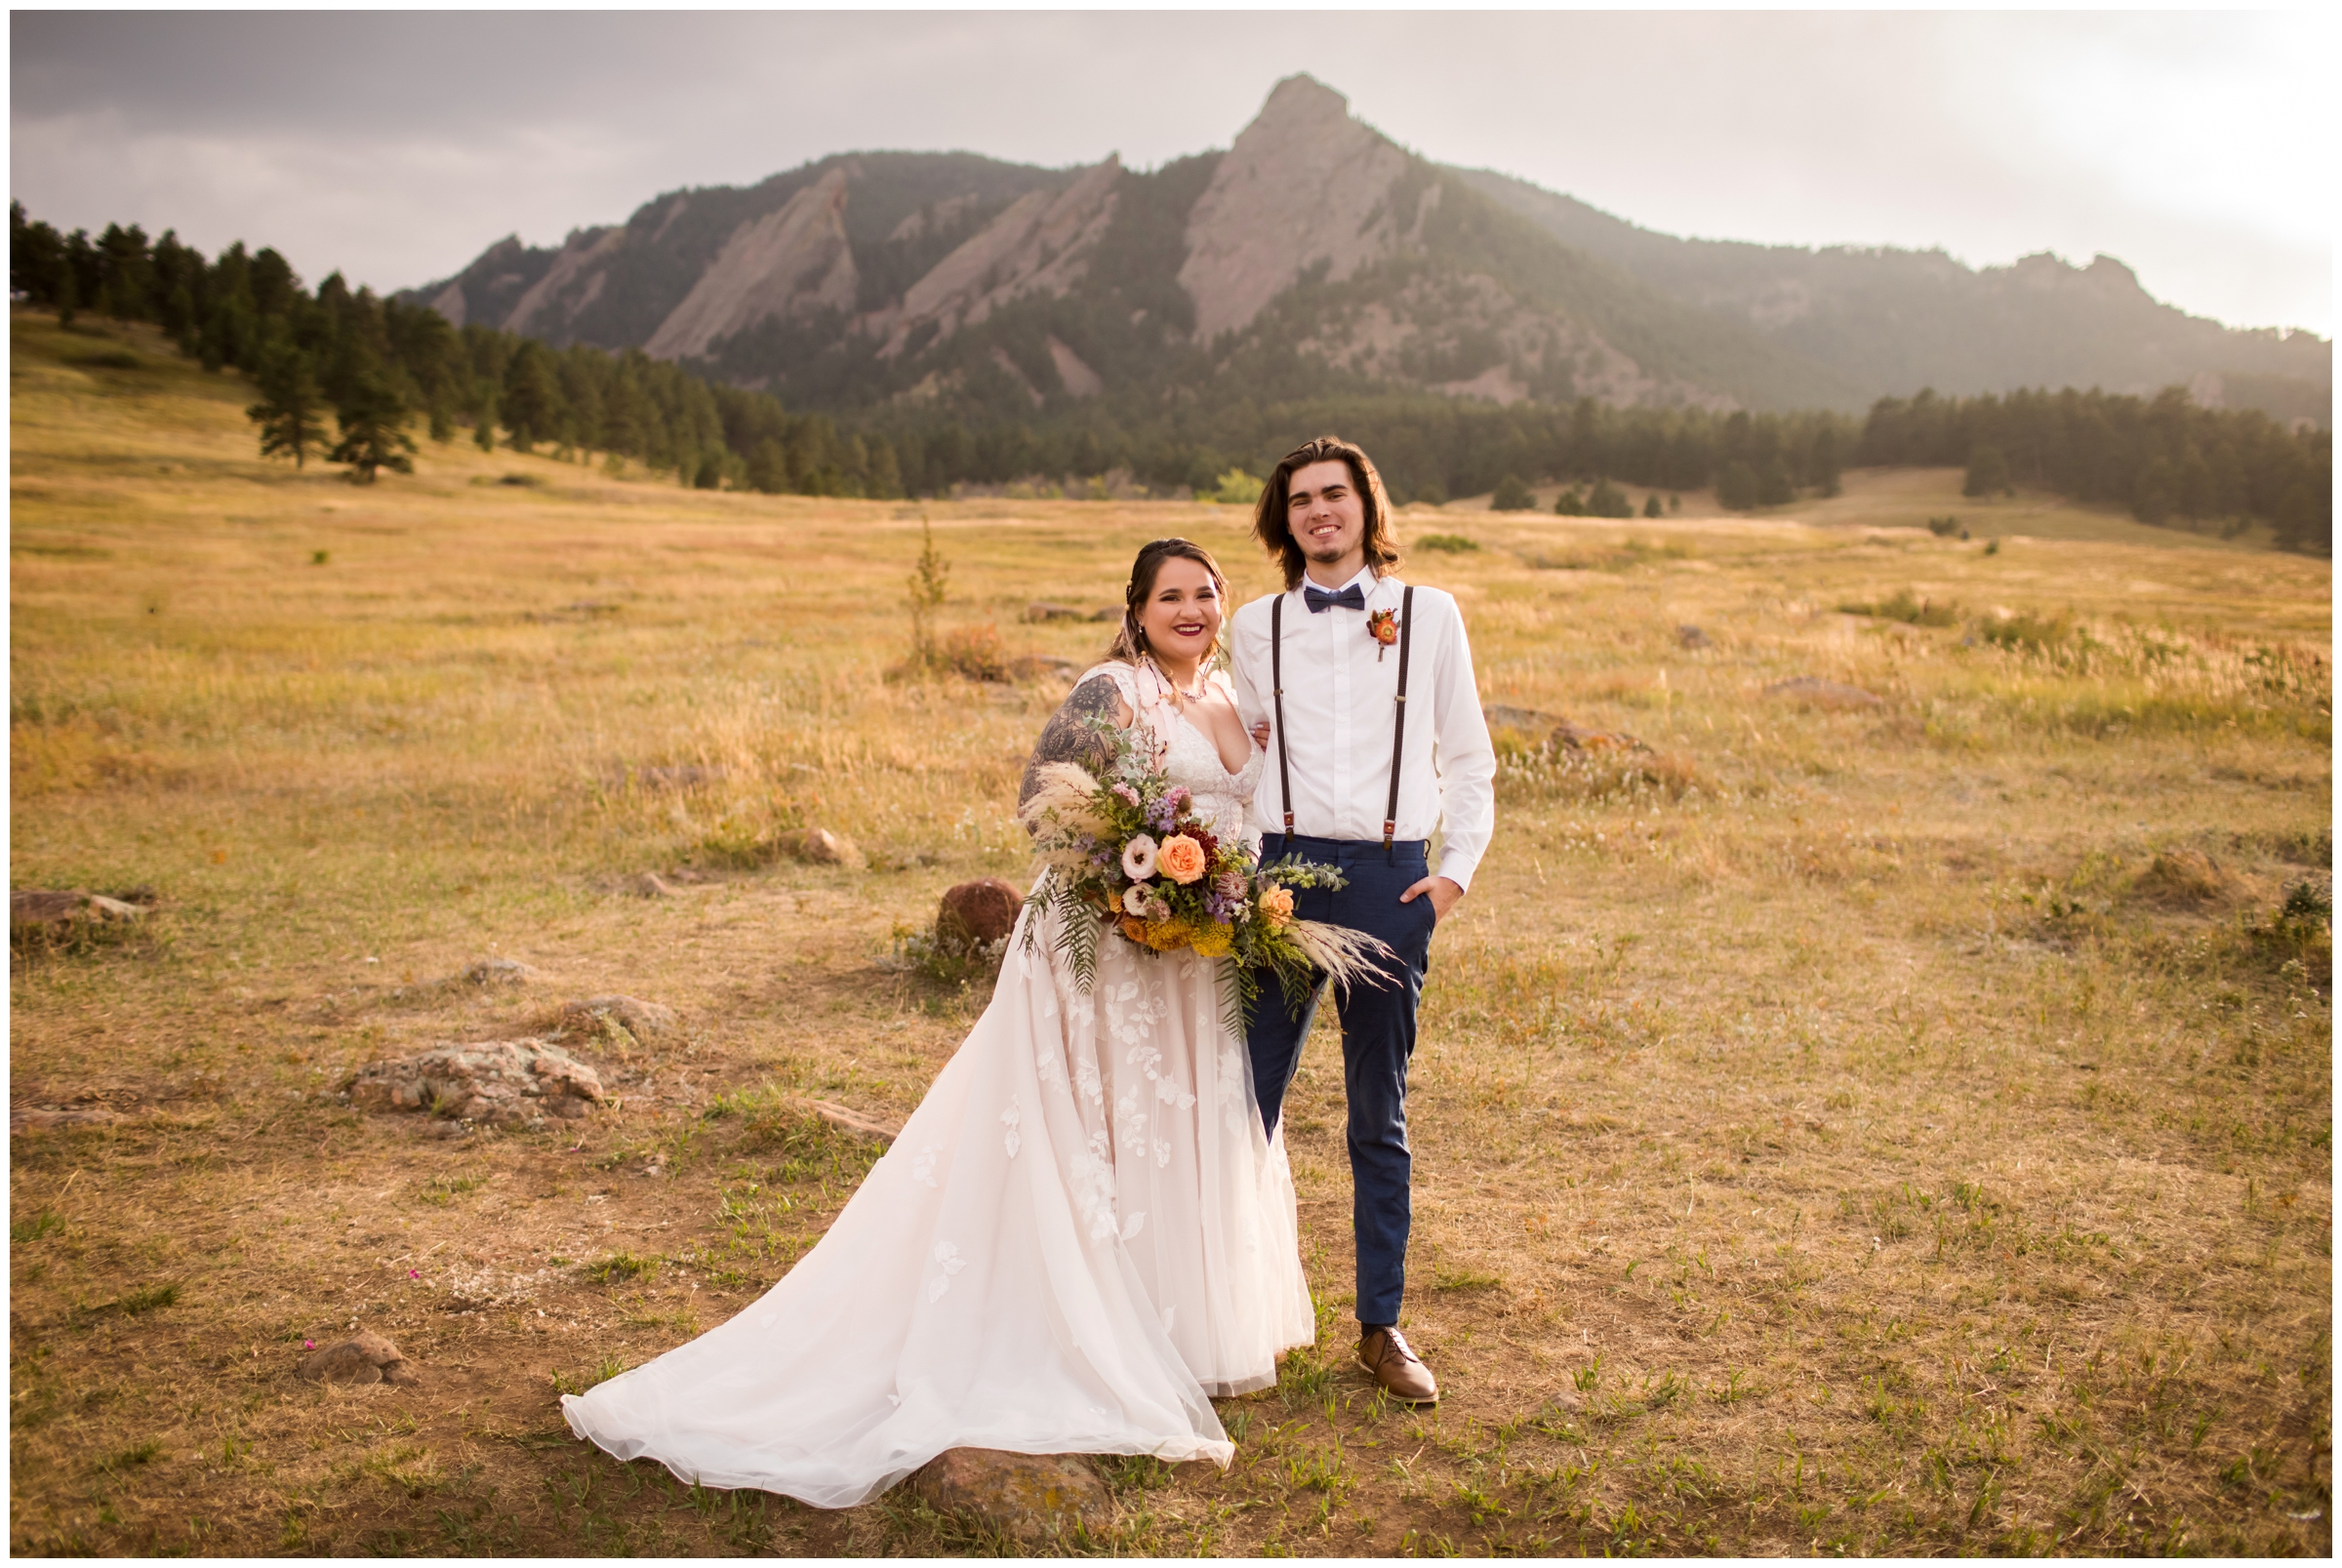 Boulder flatirons wedding inspiration at Chautauqua Park